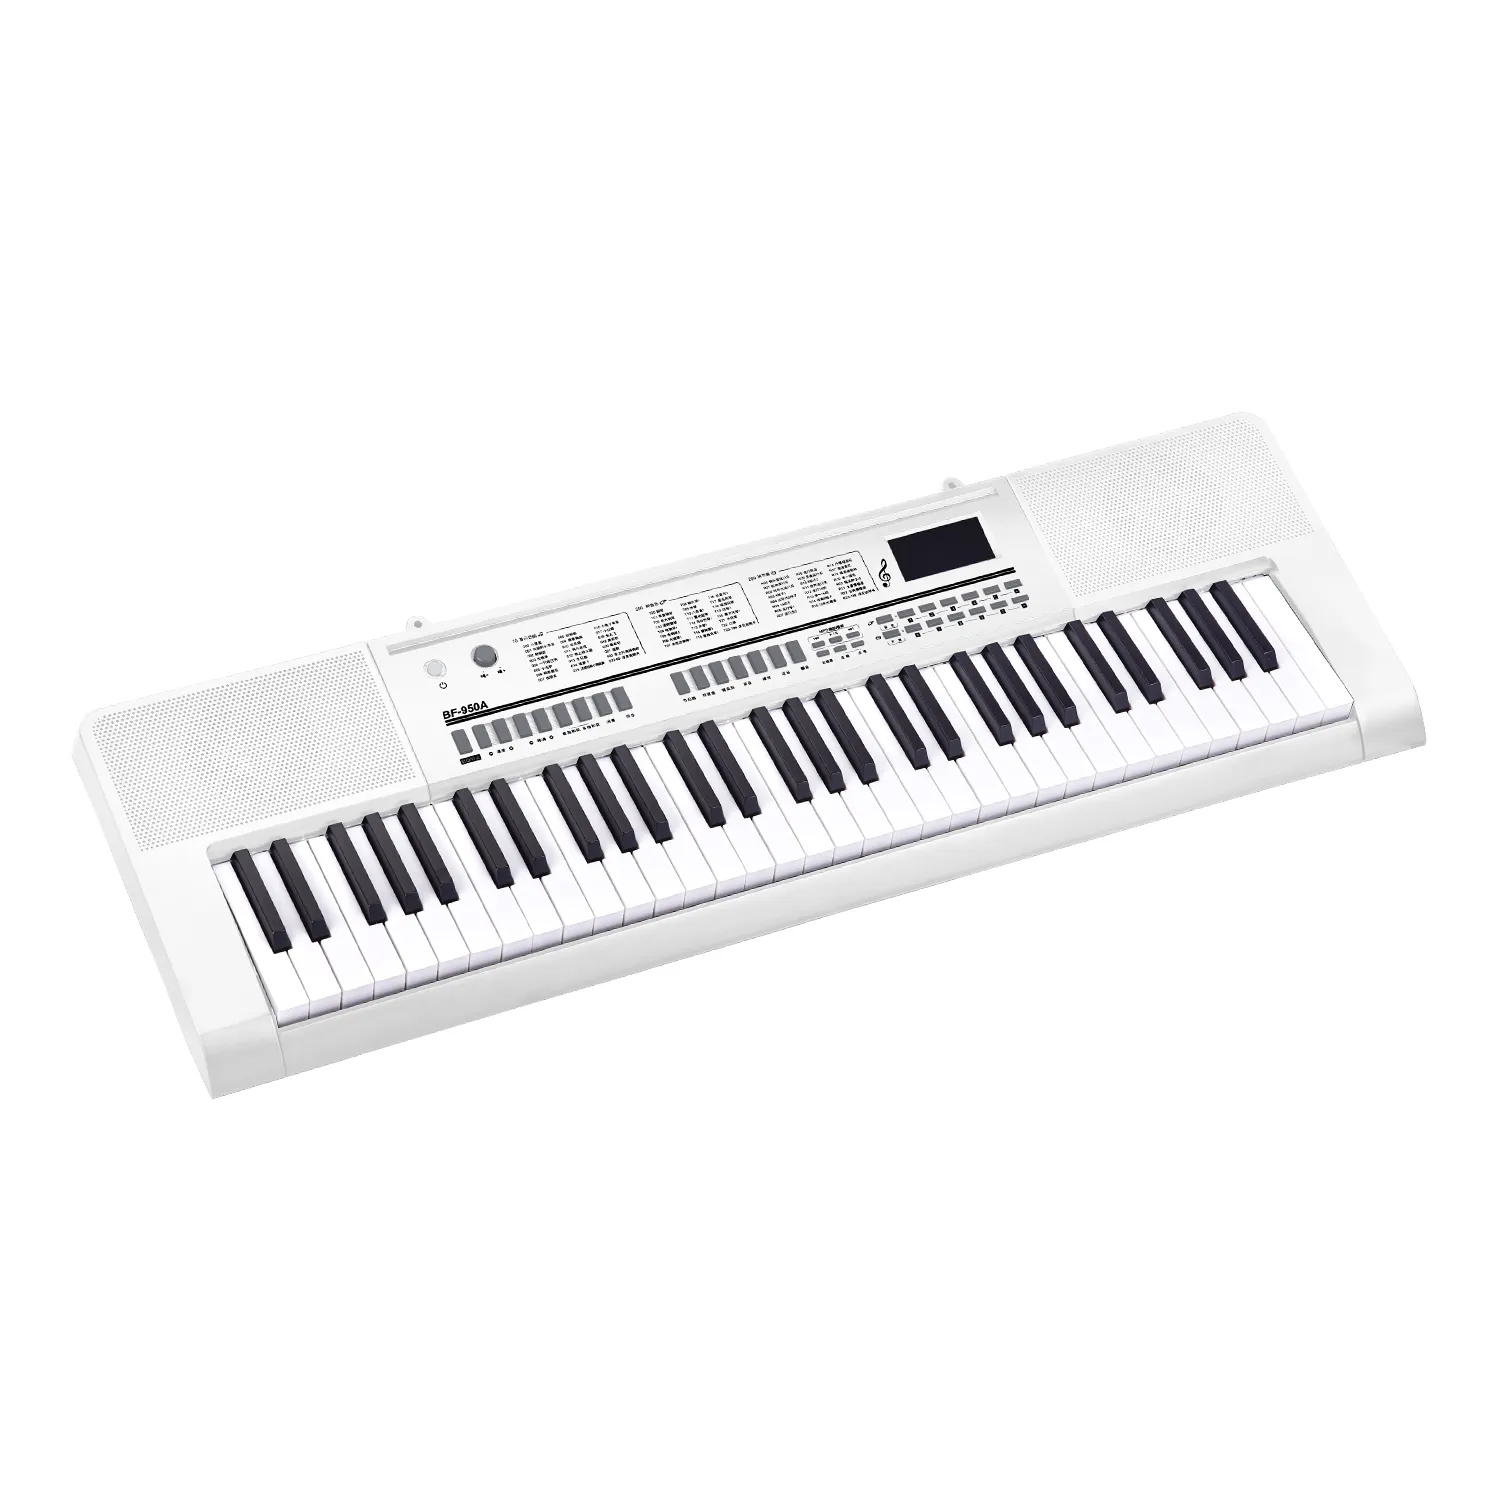 BF-950A diskon besar multi-fungsional Piano elektronik Synthesizer Teclado Keyboard elektronik musikal Organ untuk distribusi 60 200